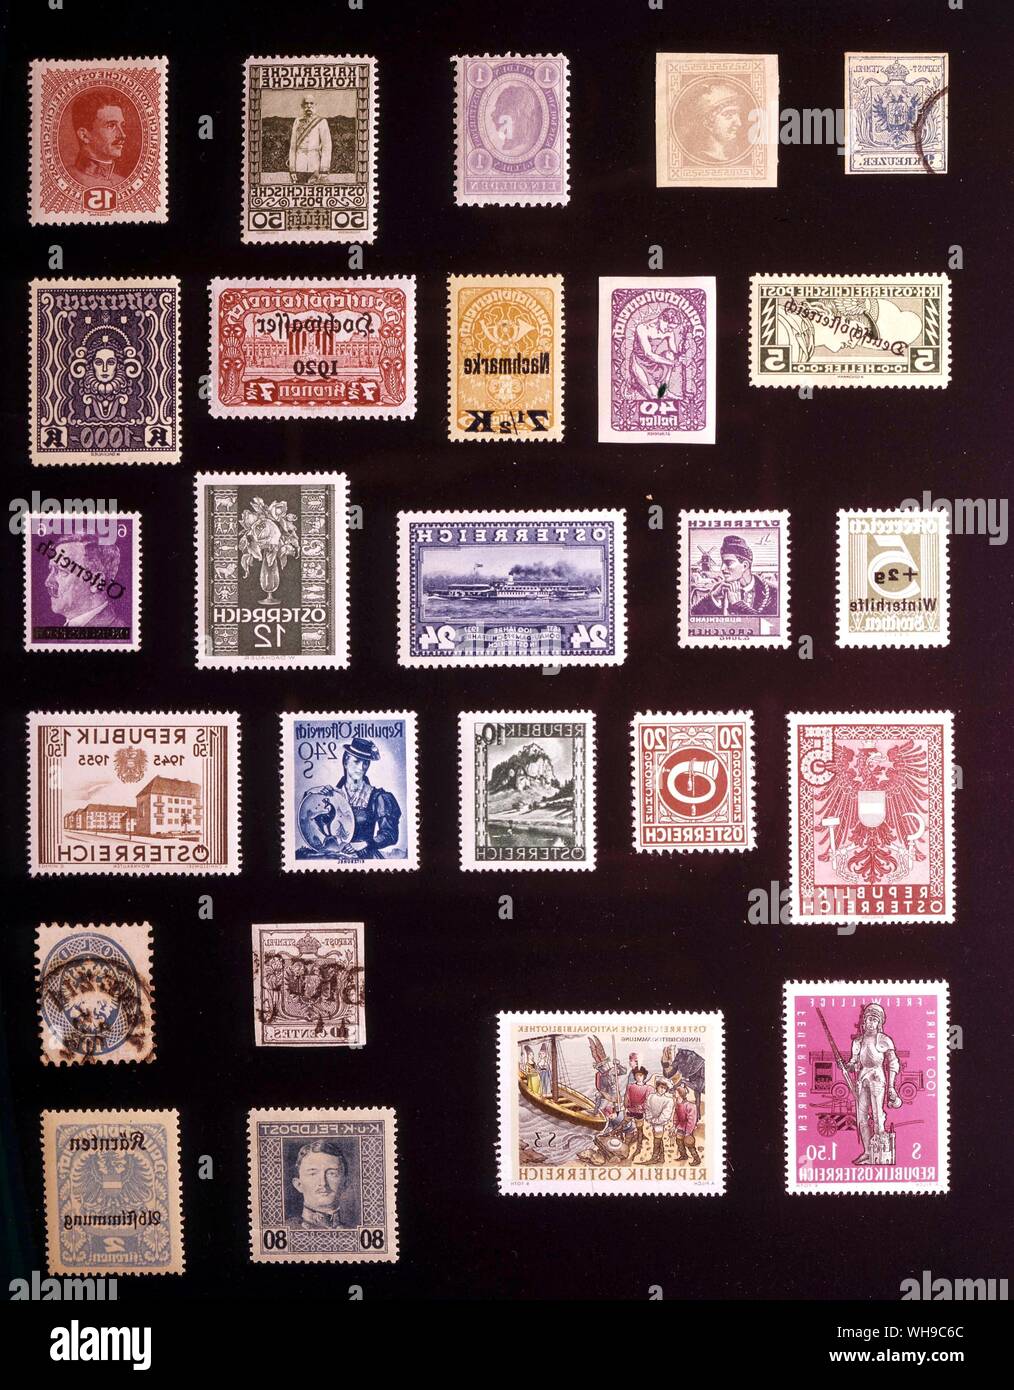 EUROPE - AUSTRIA: (left to right) 1. 9 kreuzer, 1850, 2. Newspaper stamp, 1867, 3. 1 gulden, 1896, 4. 50 heller, 1908, 5. 15 heller, 1917, 6. 5 heller newspaper express stamp, 1919, 7. 40 heller, 1919, 8. 7.5 kronen, postage due stamp, 1921, 9. 7.5 kronen, 1921, 10. 1000 kronen, 1922, 11. 5 + 2 groschen, Winter Relief, 1933, 12. 1 groschen, 1934, 13. 24 groschen, 1937, 14. 12 groschen, 1934, 13. 24 groschen, 1937, 14. 12 groschen, 1937, 15. 6 pfennigs, 1945, 16. 5 marks, 1945, 17. 20 groschen, 1945, 18. 10 groschen, 1945, 19. 2.40 schillings, 1951, 20. 1.50 schillings, 1955, 21. 1.50 Stock Photo